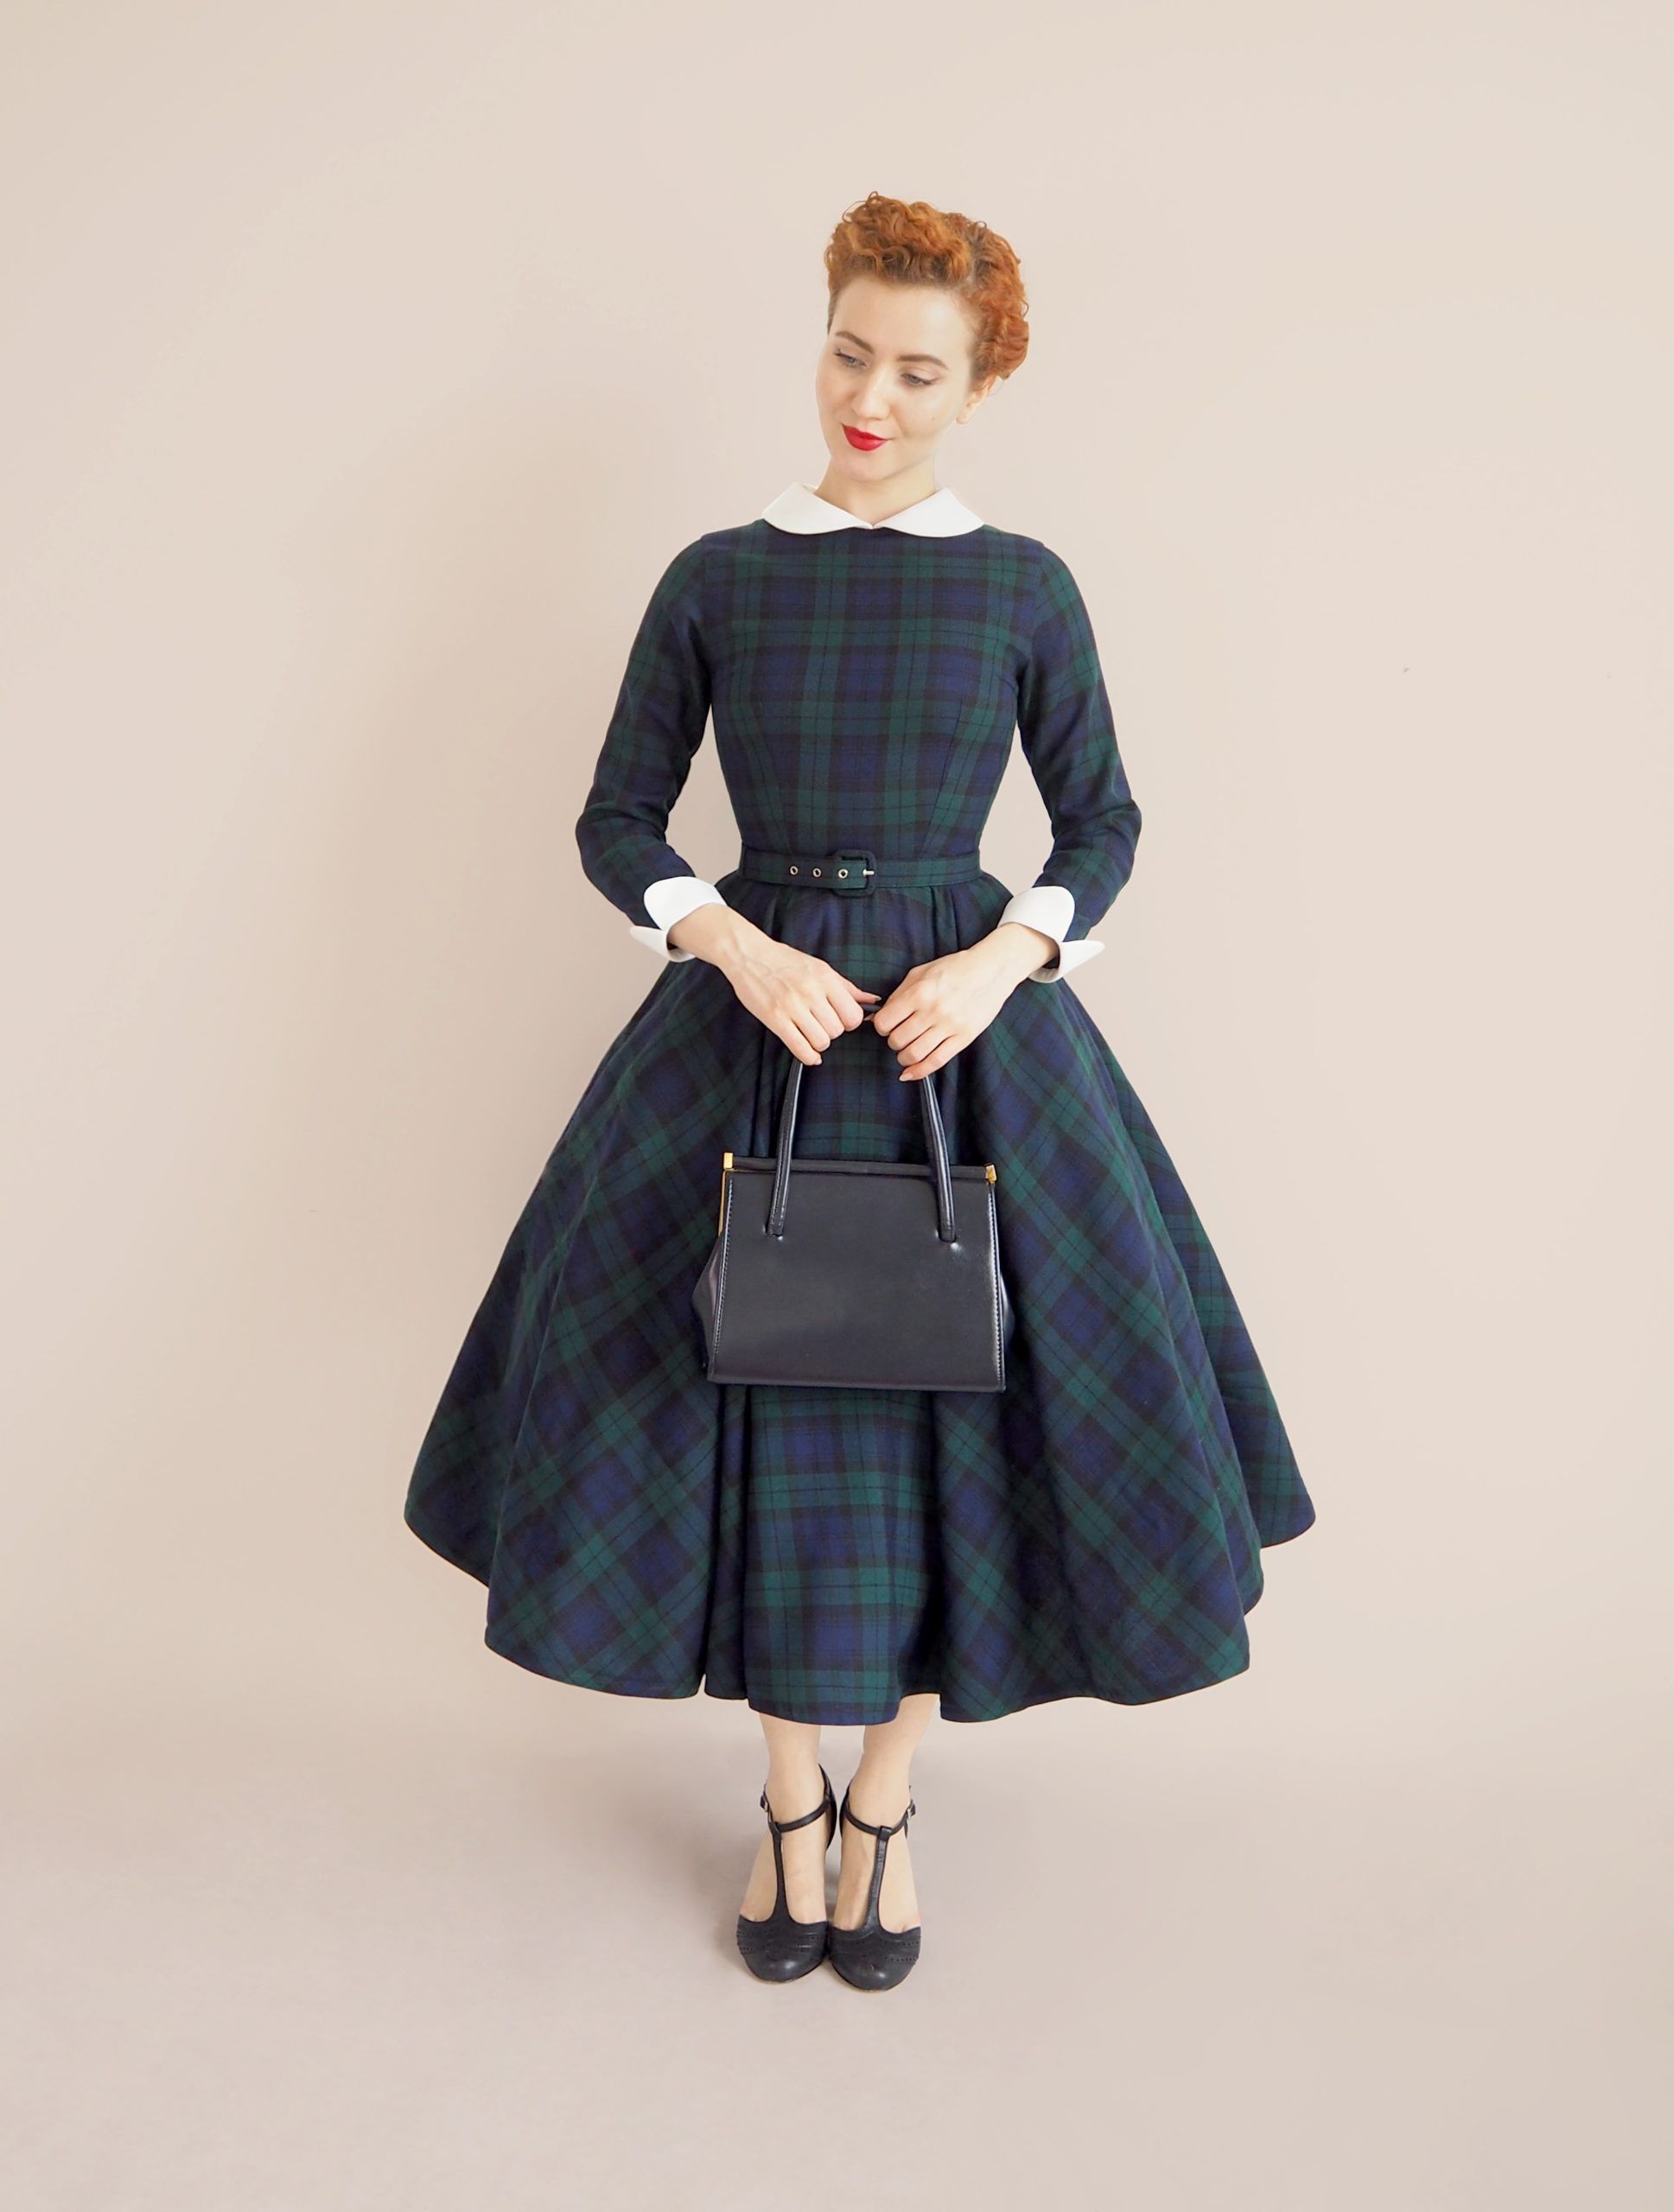 Audrey 1951 Dress - Sewing Pattern - Audrey 1951 Dress - Sewing Pattern -   19 beauty Fashion dresses ideas